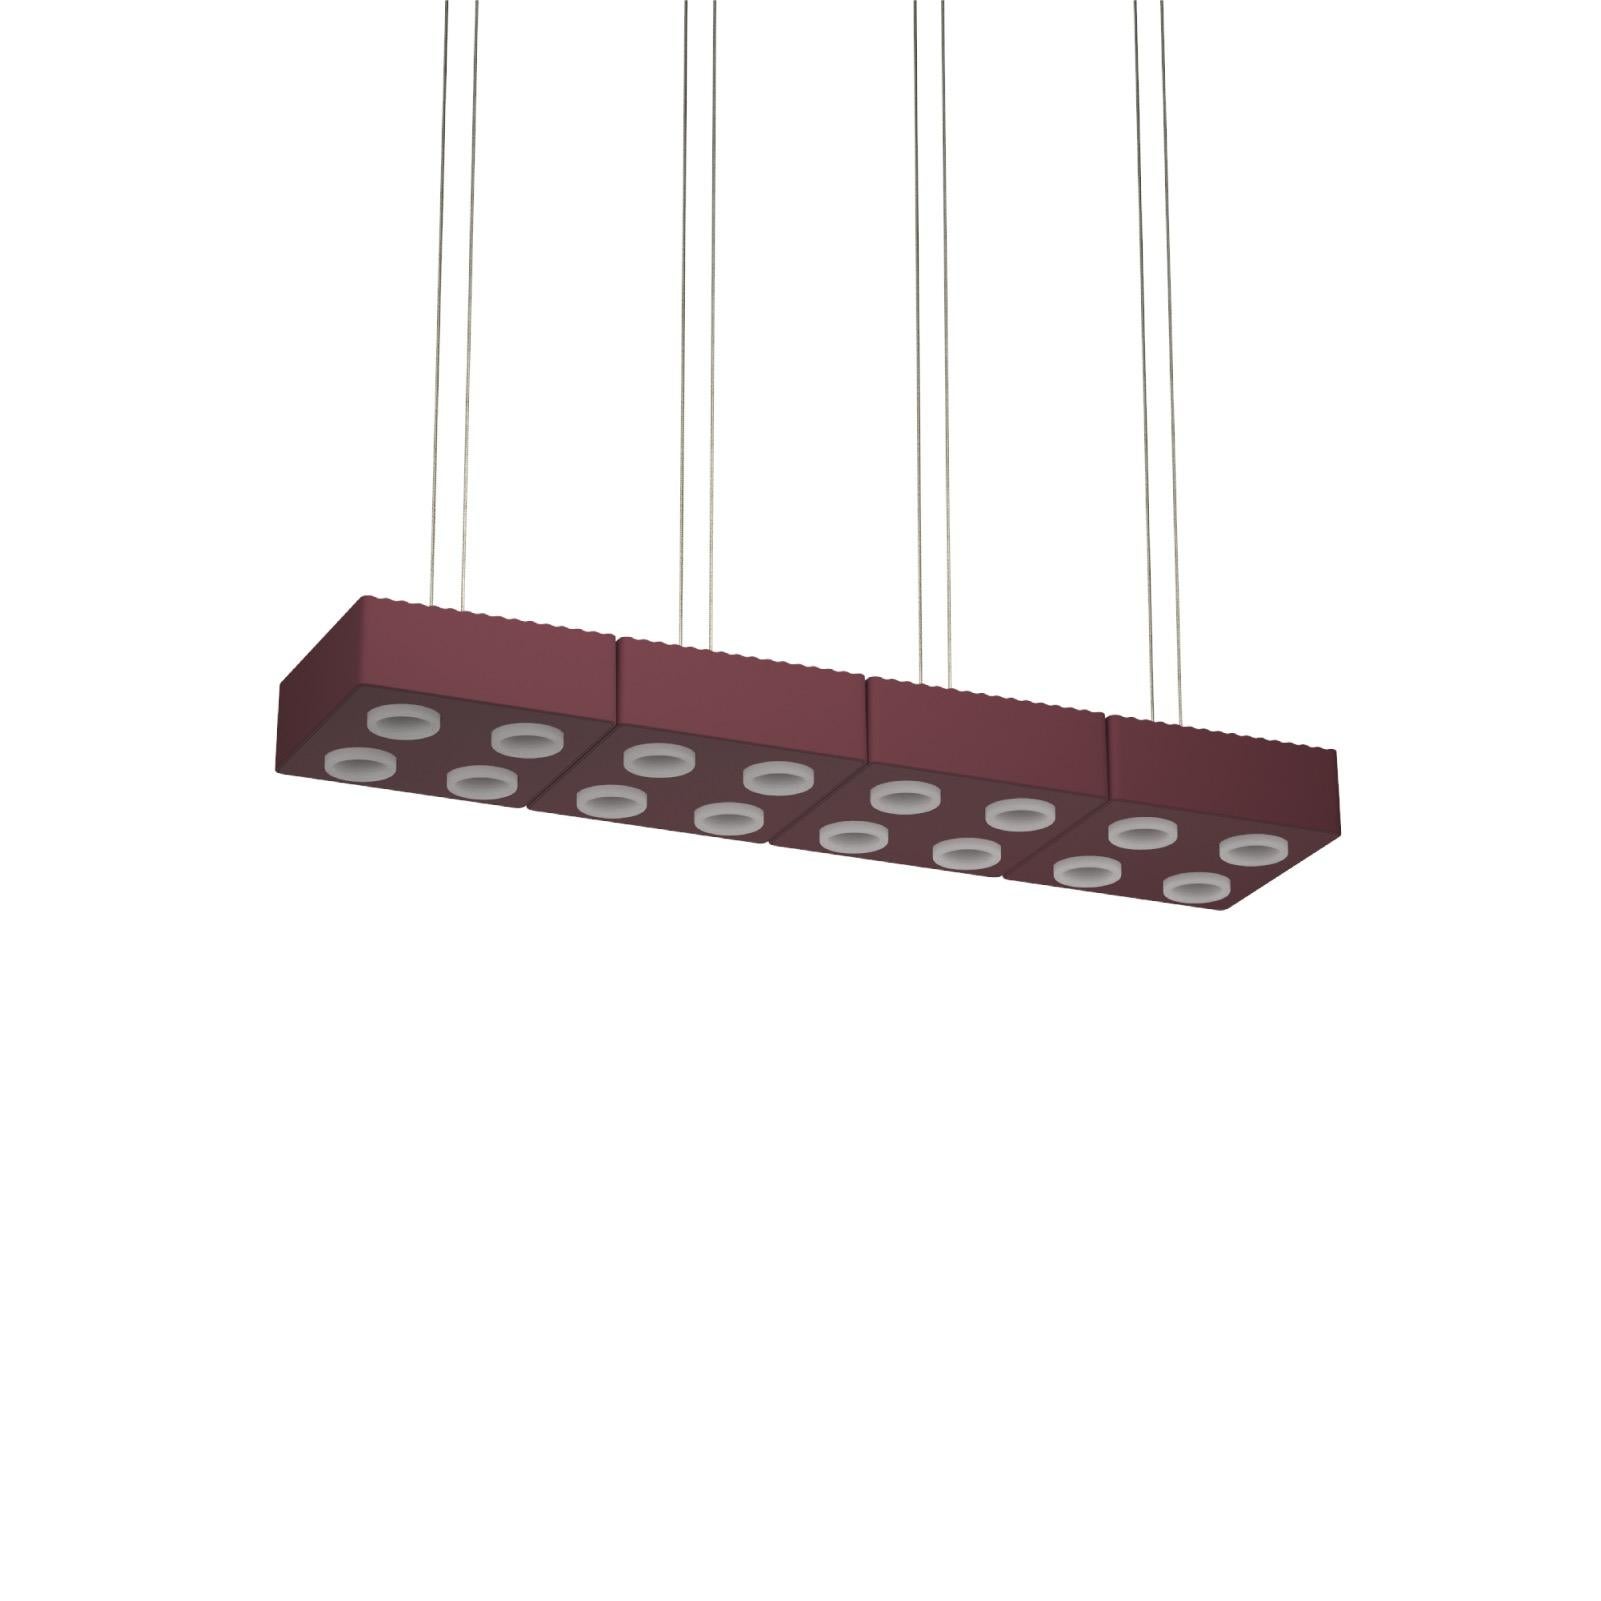 Domino Pendant lamp by Sylvain Willenz x AGO Lighting
Burgundy - Quad Pendant Lamp

Materials: Aluminum 
Light Source: Integrated LED (COB), DC
Watt. 60 W (15W x 4)
Color temp. 2700 / 3000K
Cable Length: 3m 

Available colors:
Charcoal,